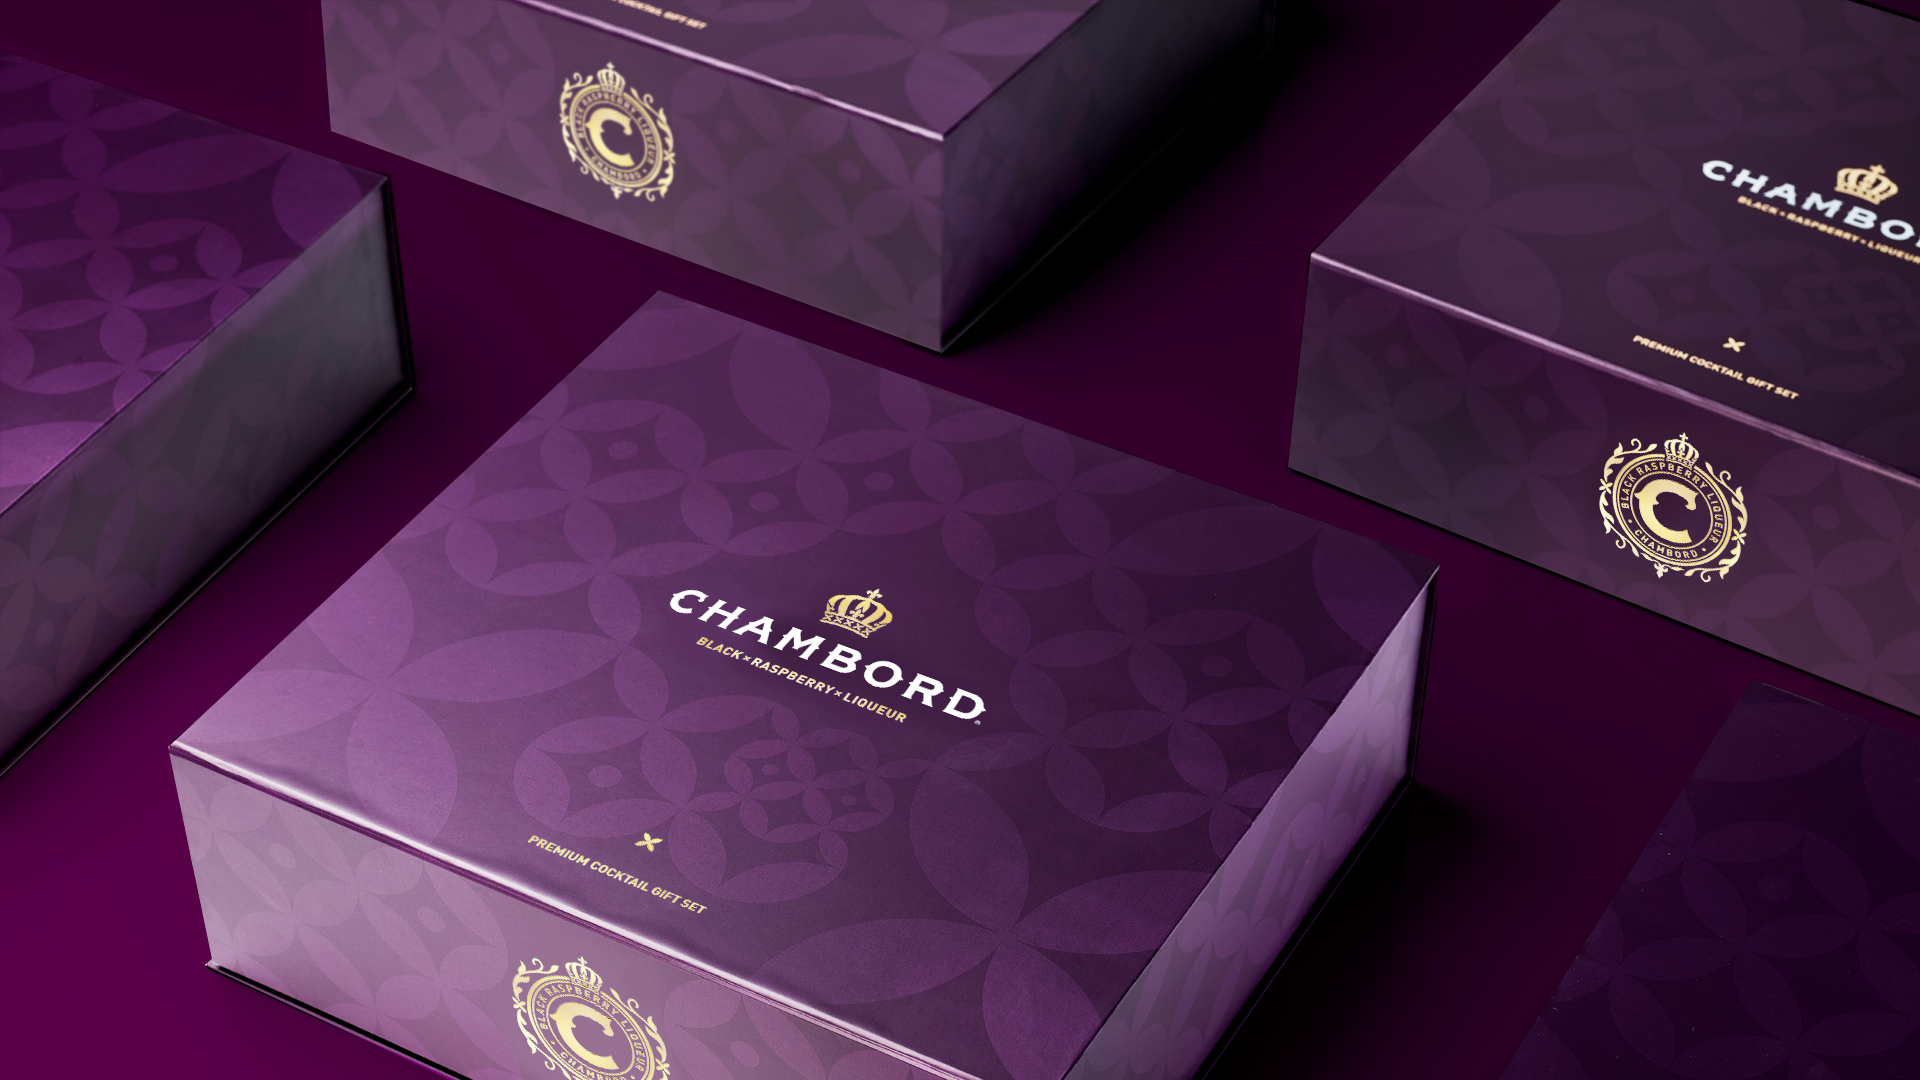 Chambord Gifting box set Design